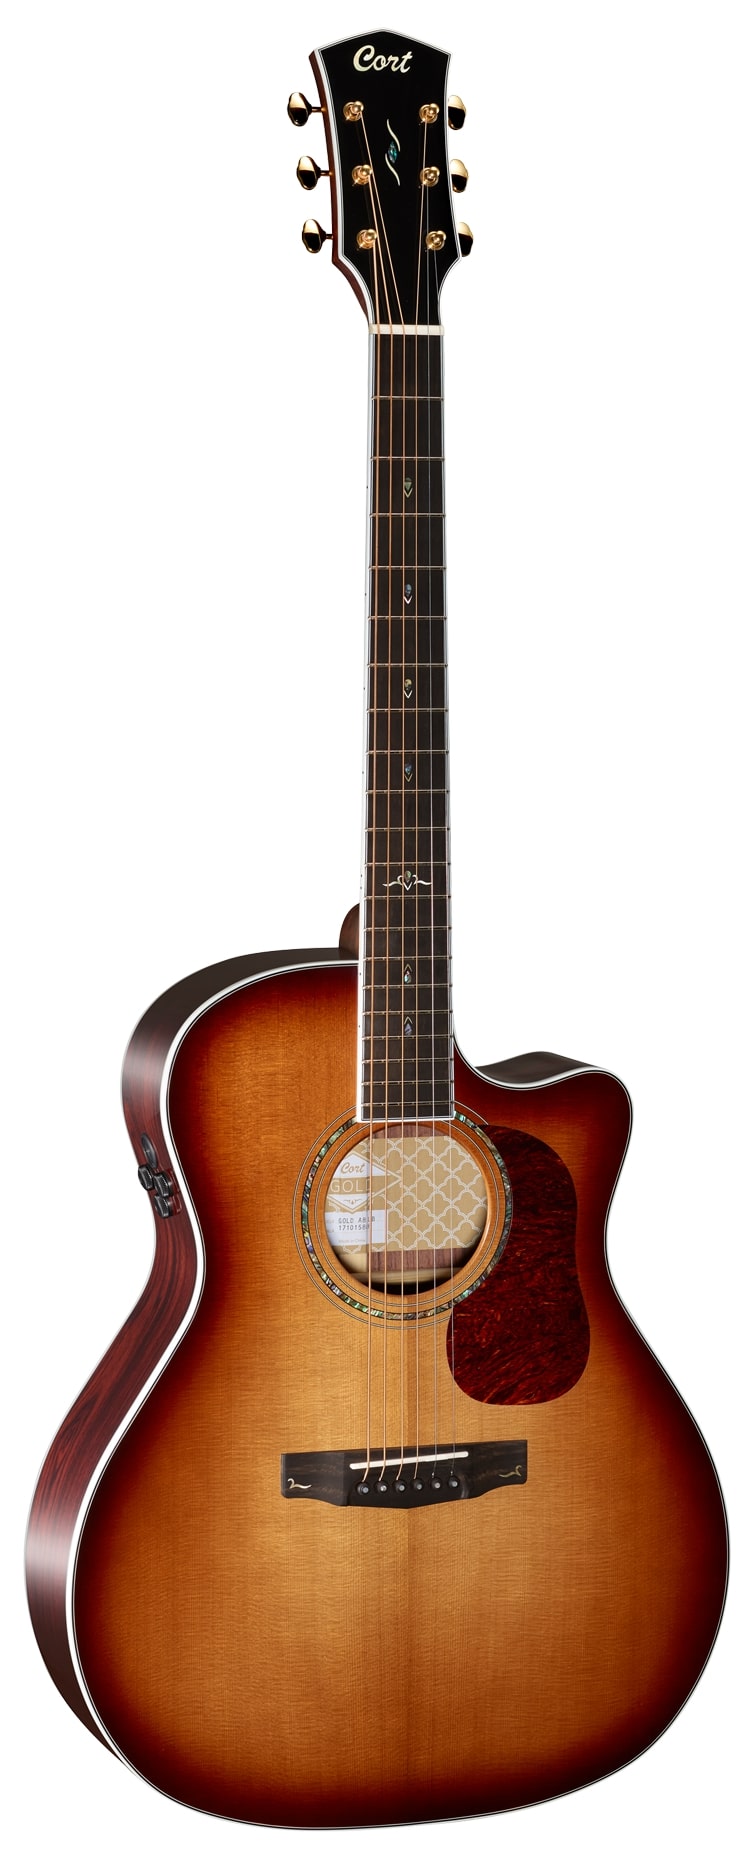 Электроакустические гитары Cort Gold-A8-WCASE-LB (чехол в комплекте) электроакустические гитары cort gold passion wcase nat чехол в комплекте